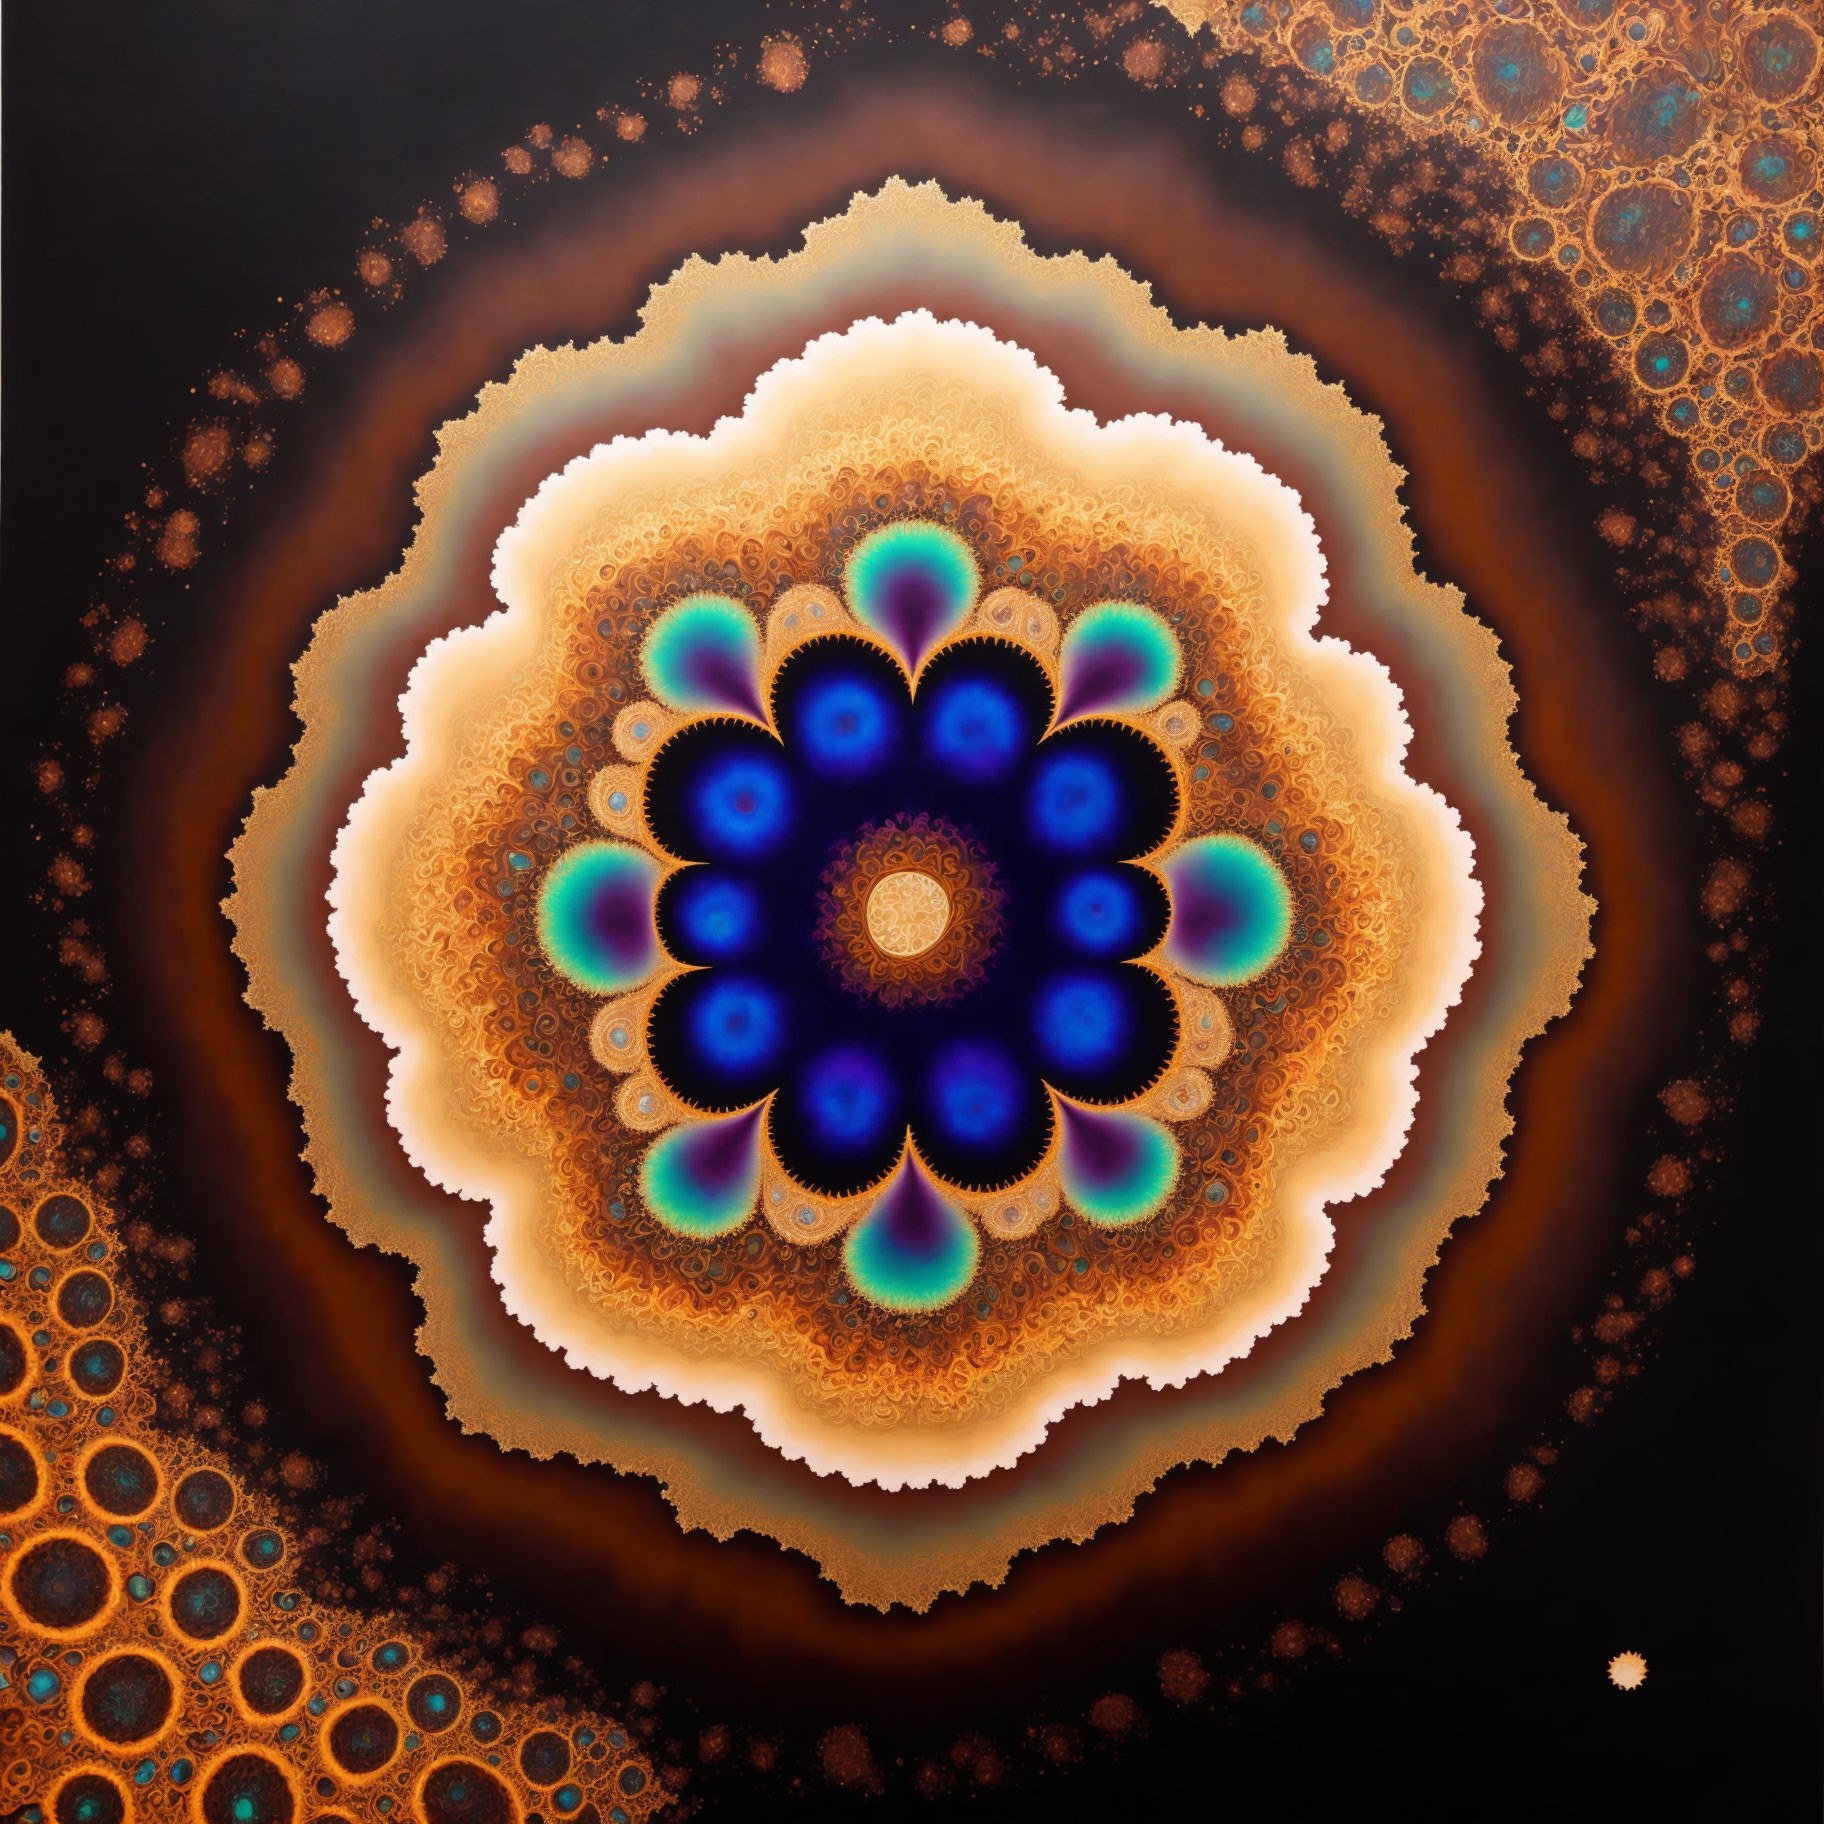 Intricate Orange, Brown & Blue Fractal Cosmic Flower Pattern